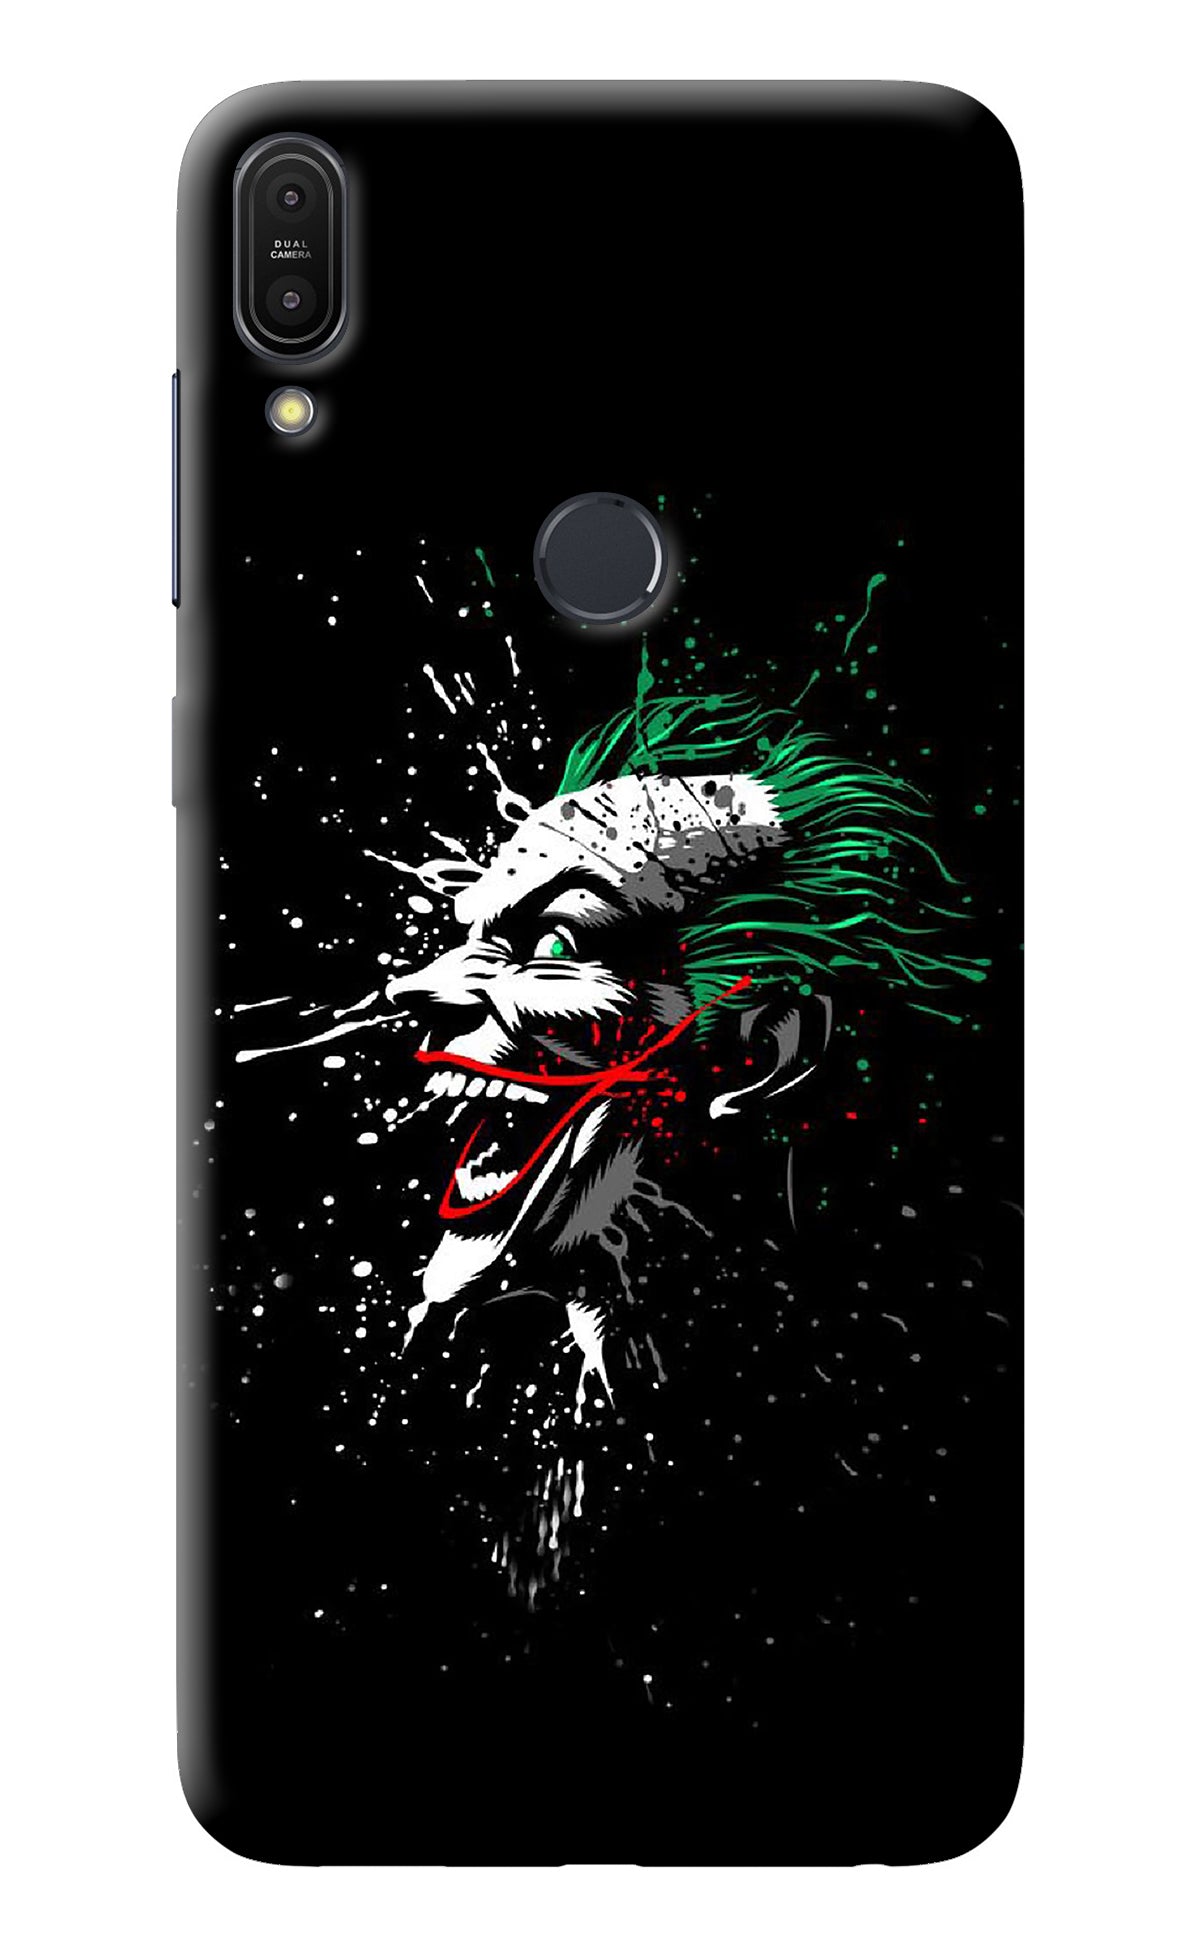 Joker Asus Zenfone Max Pro M1 Back Cover